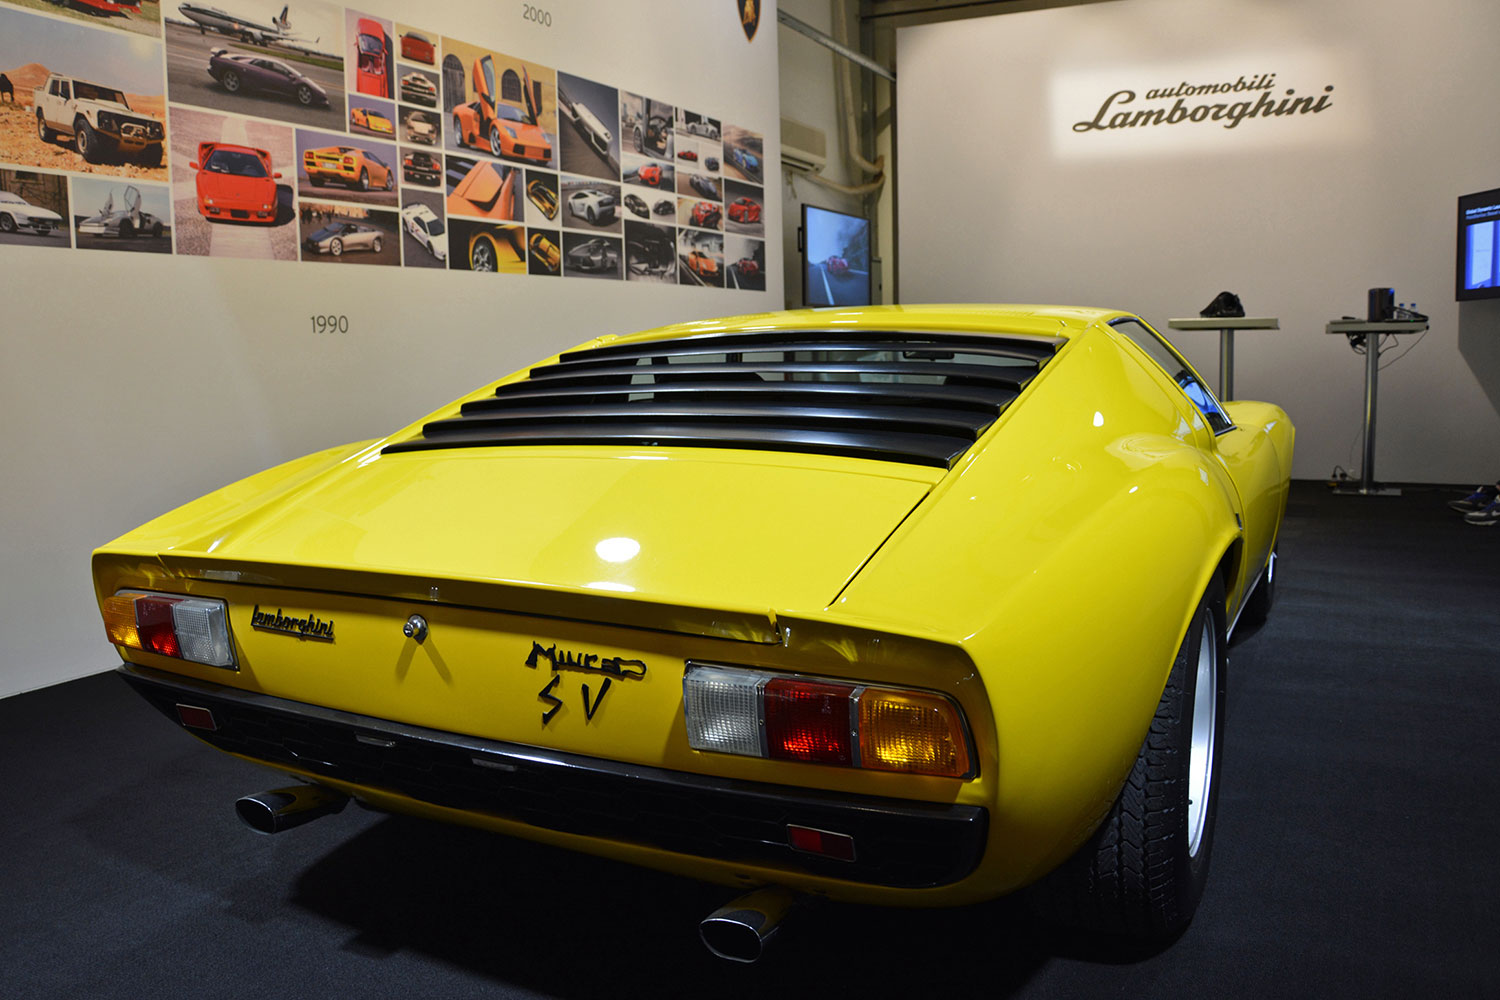 Lamborghini Classic Center